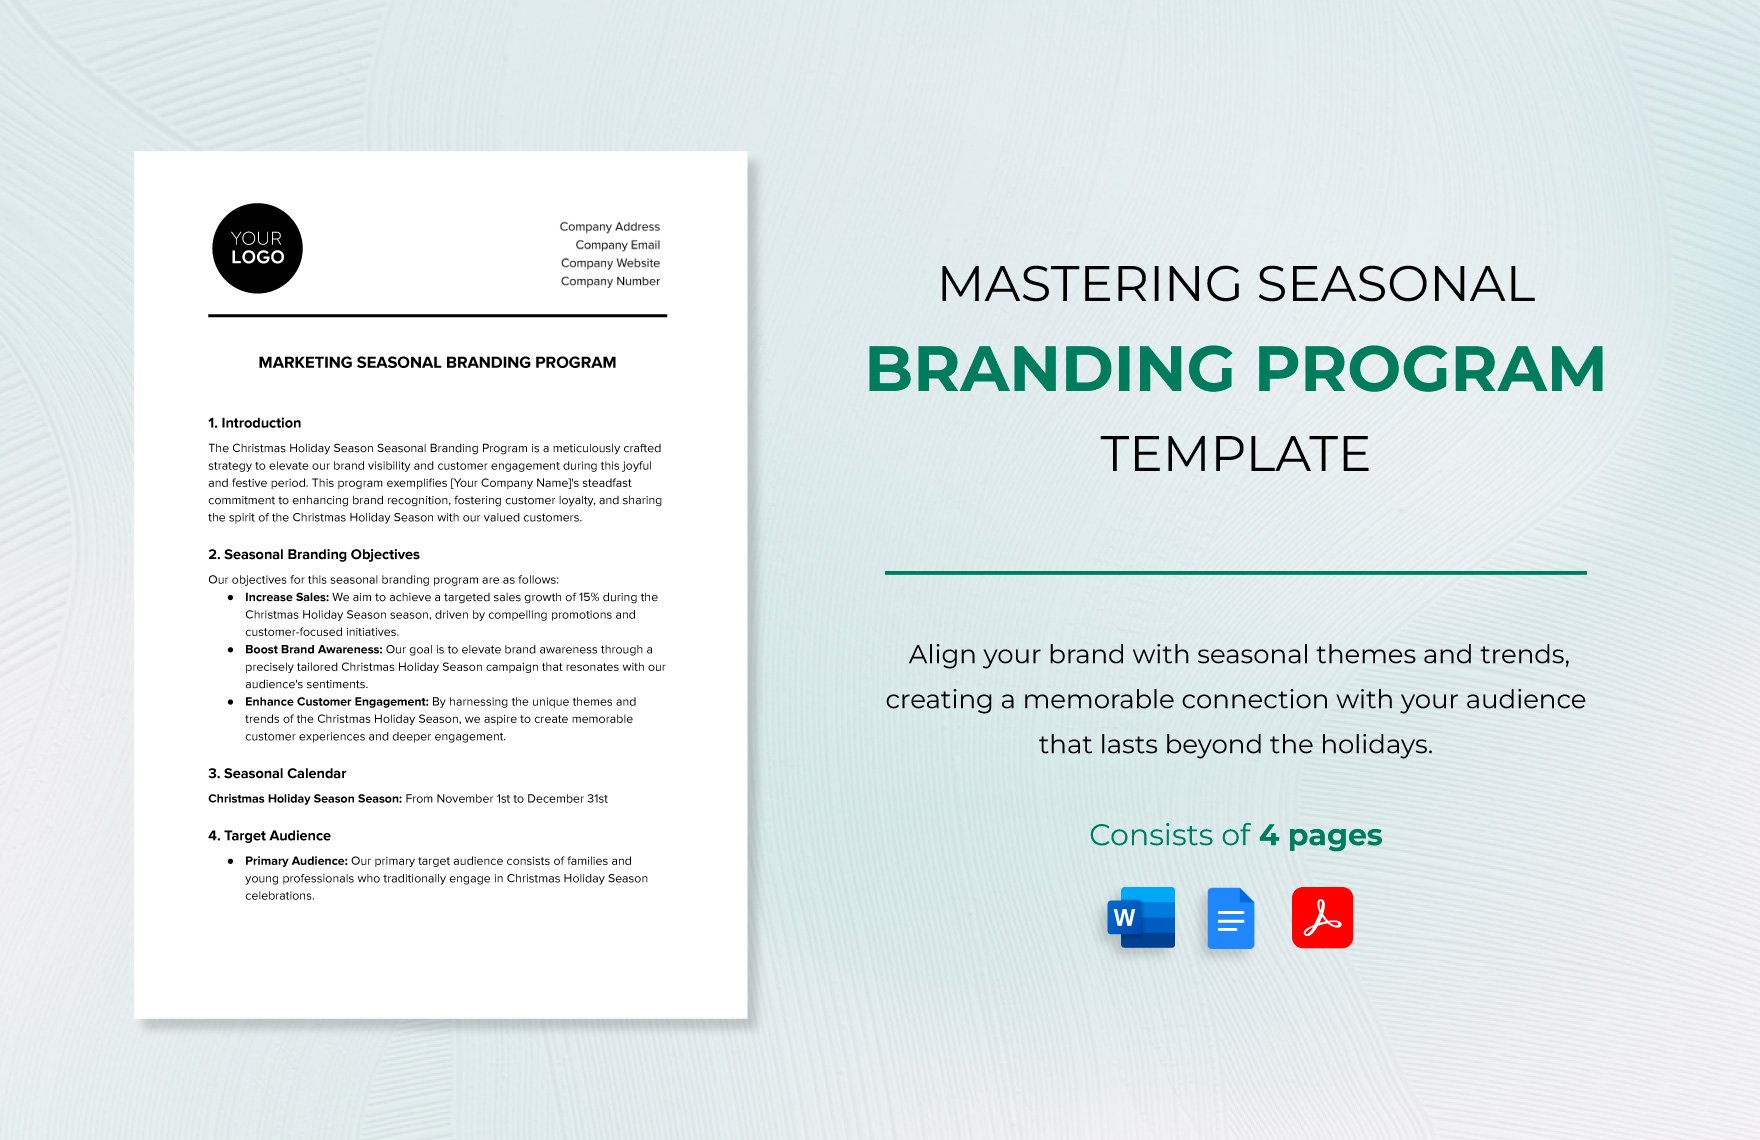 Marketing Seasonal Branding Program Template in Word, Google Docs, PDF